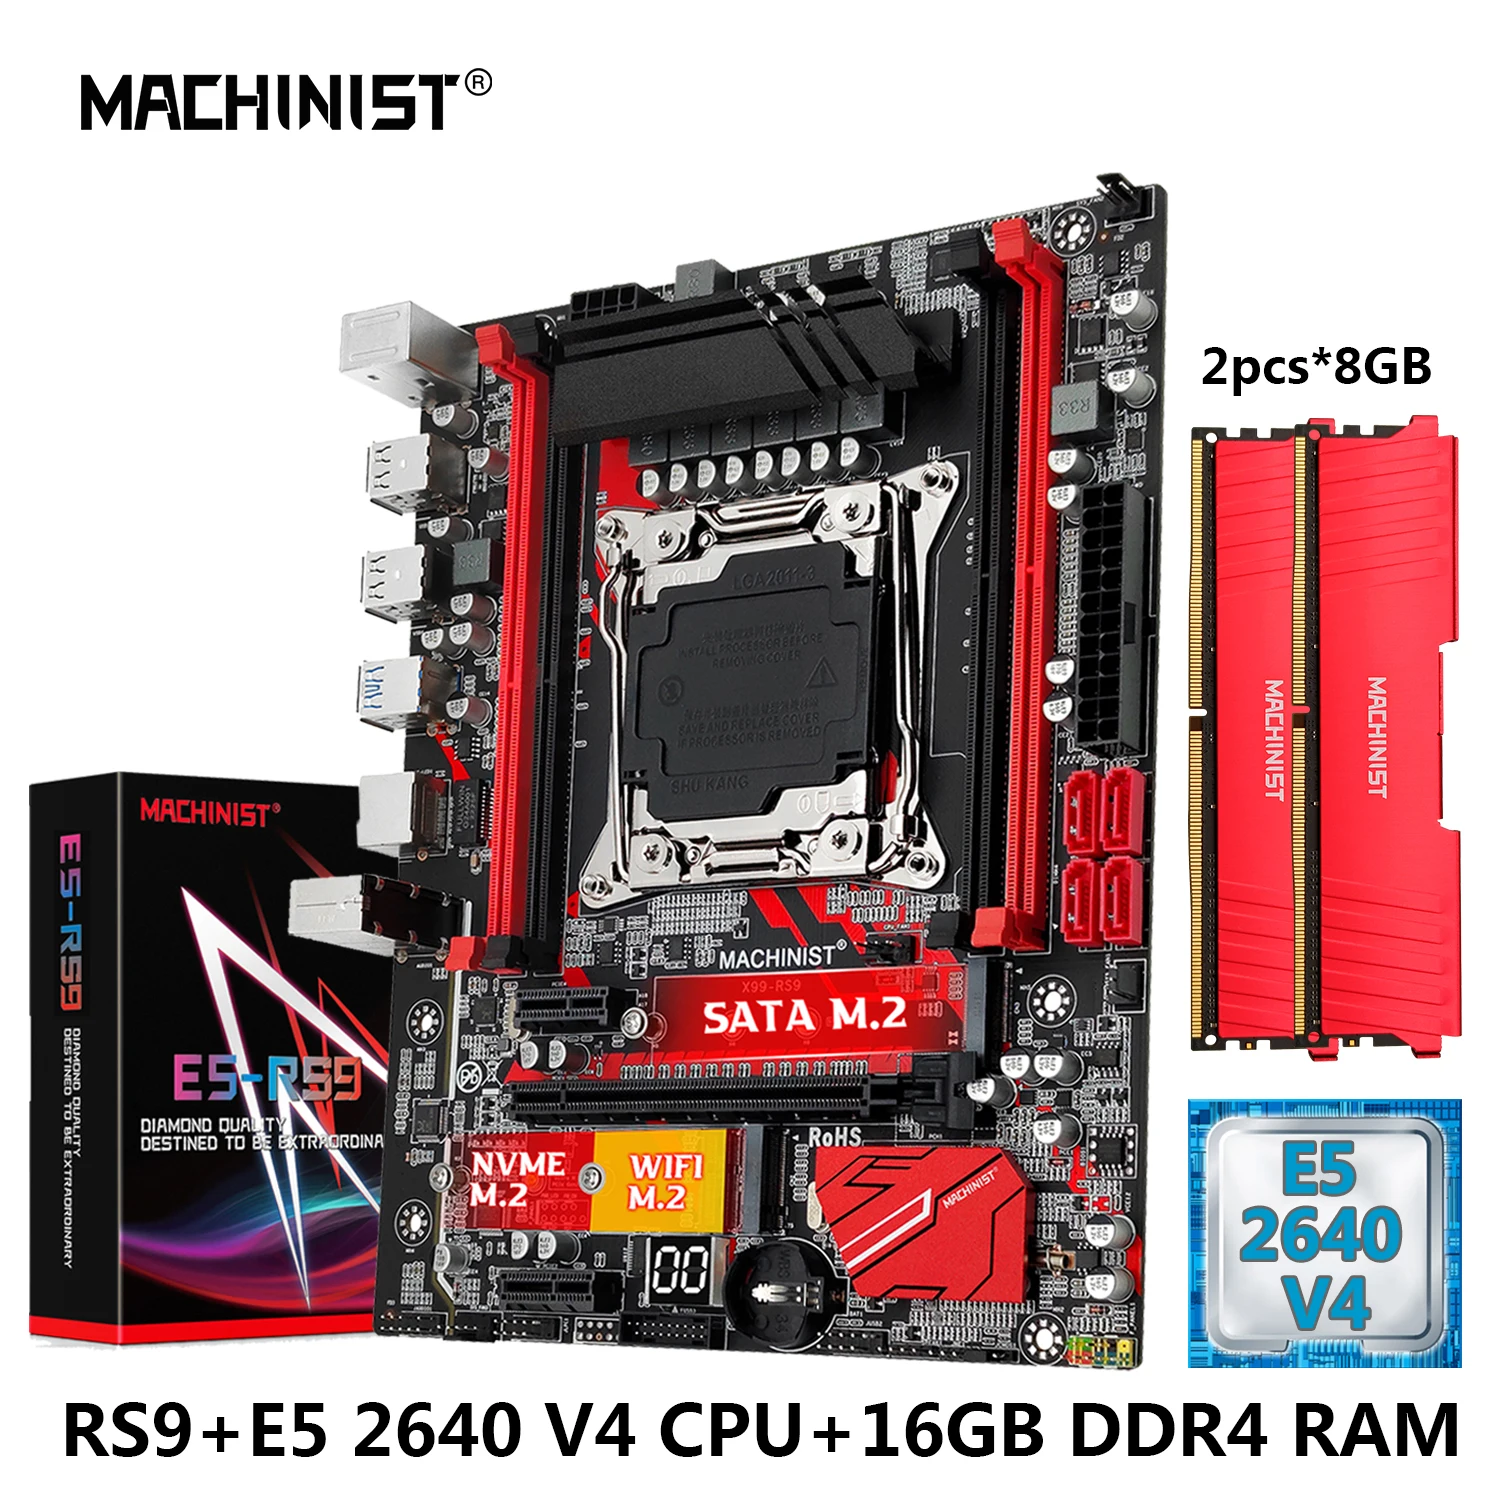 

MACHINIST RS9 X99 Motherboard Combo Xeon E5 2640 V4 Kit LGA 2011-3 CPU DDR4 2*8G=16GB RAM 2133MHz NVME M.2 USB 3.0 Four Channel